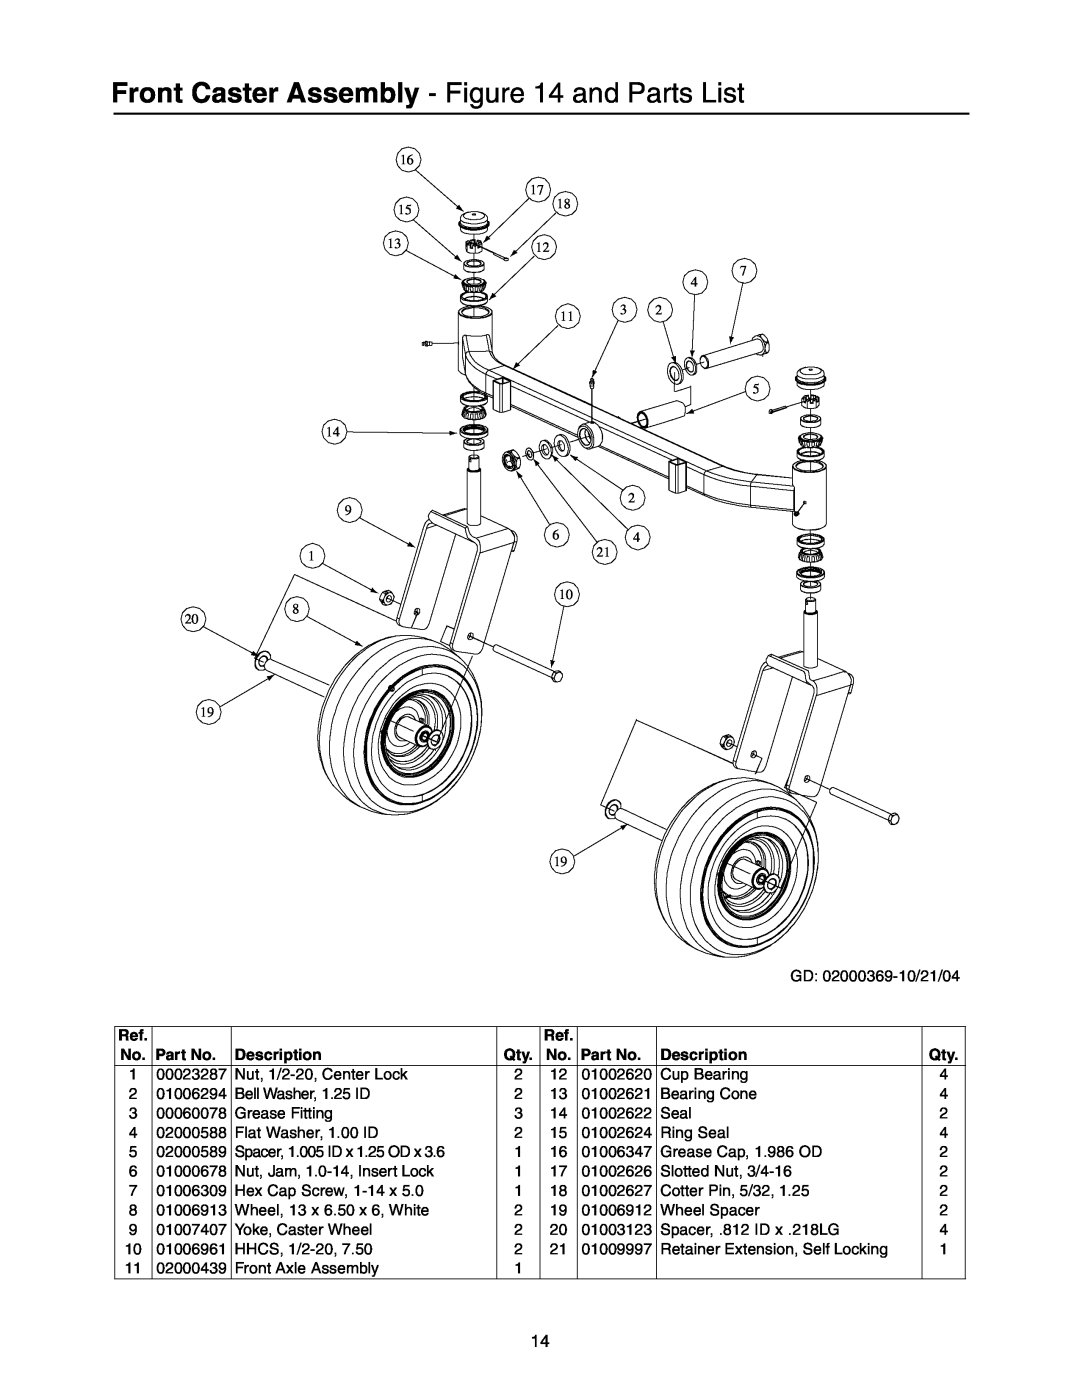 Cub Cadet Lawn Mower manual Front Caster Assembly - and Parts List, No. Part No, Description 